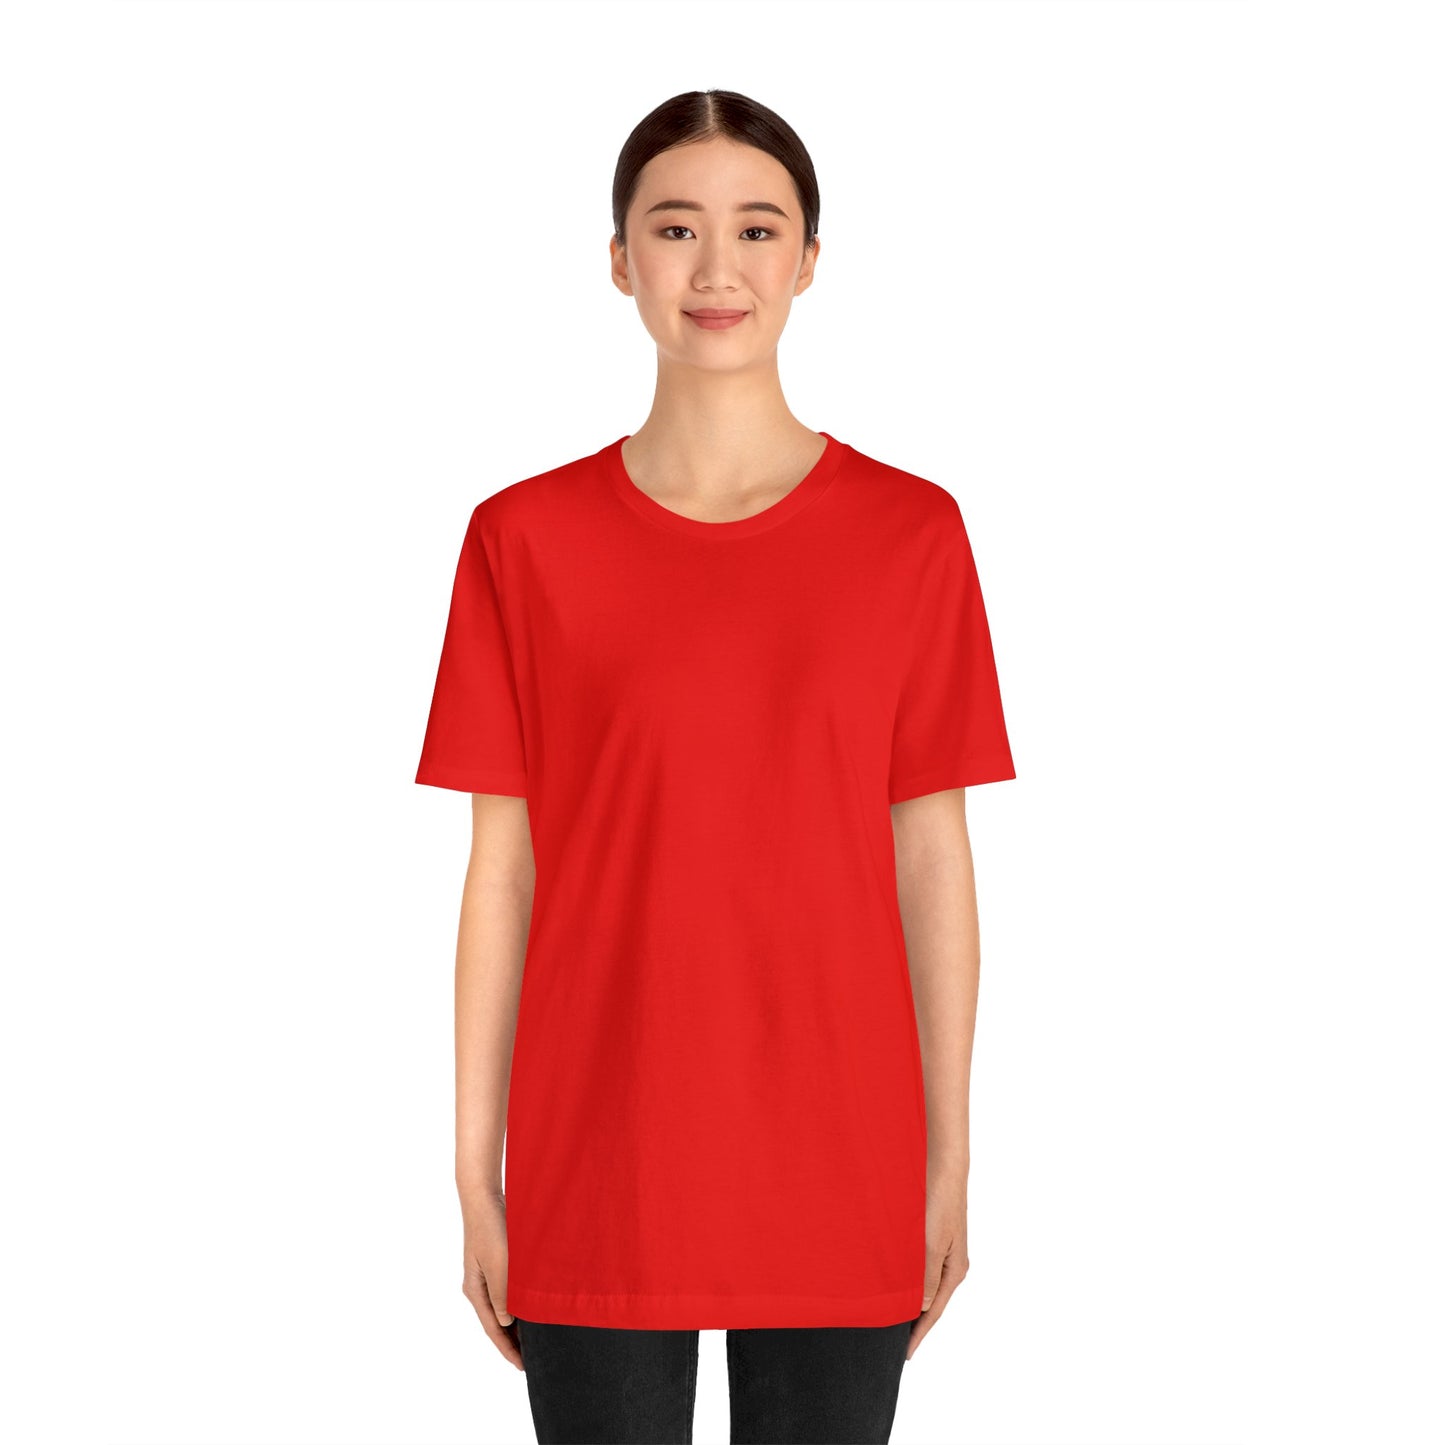 Unisex Jersey Short Sleeve Poppy Red T Shirt